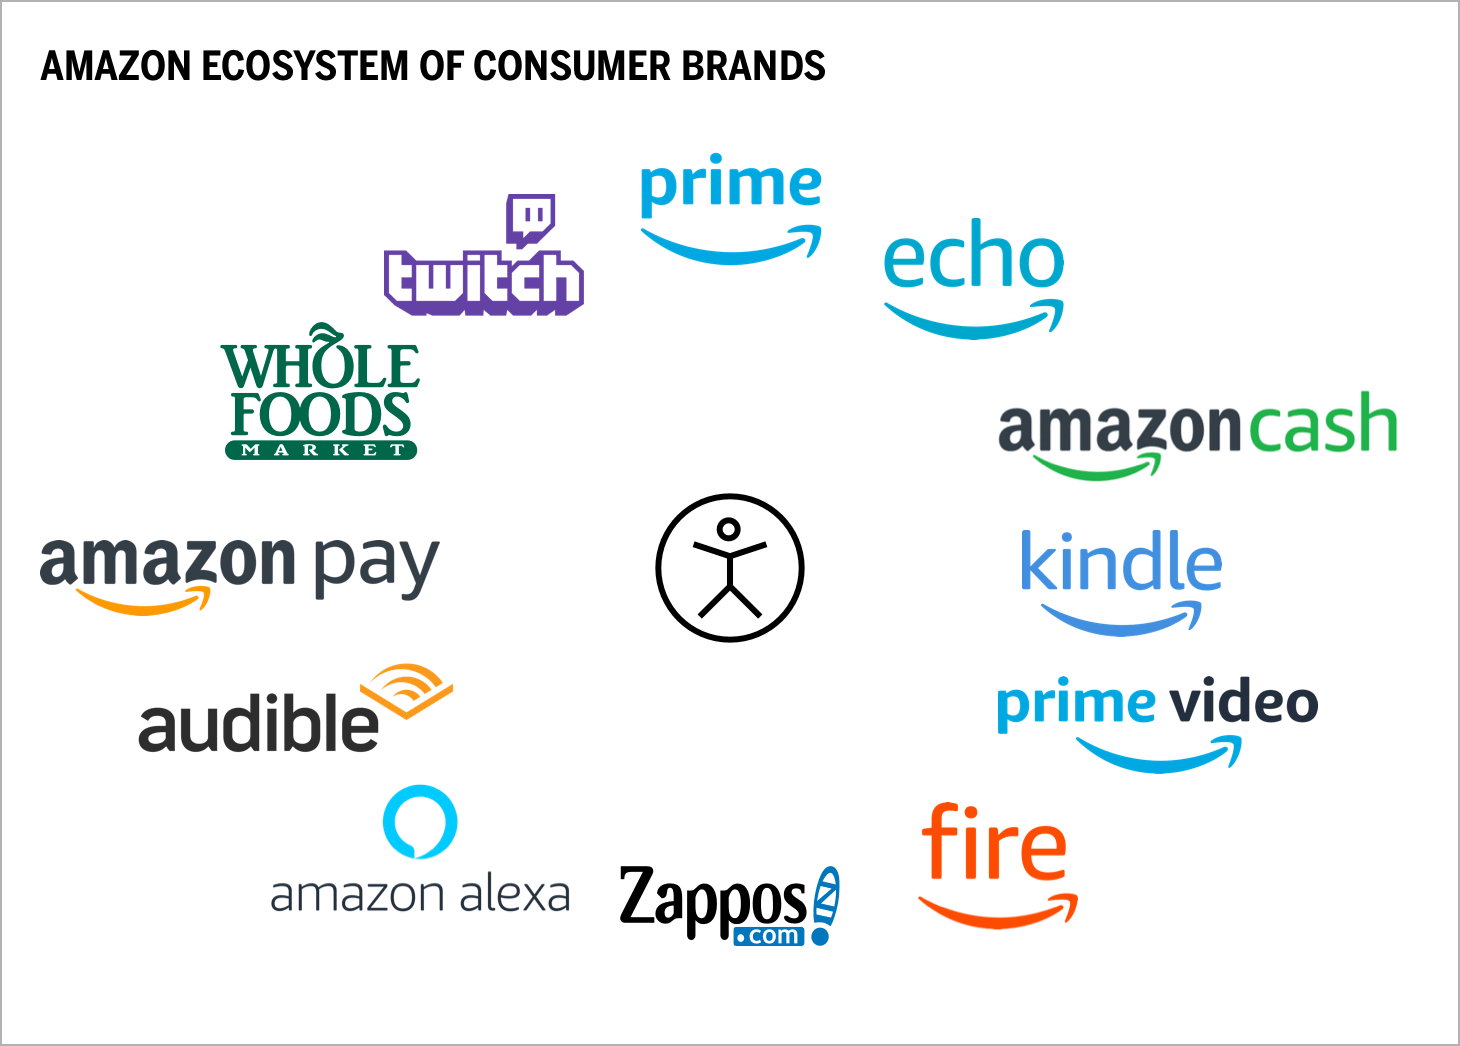 Amazon Ecosystem of Consumer Brands Chart